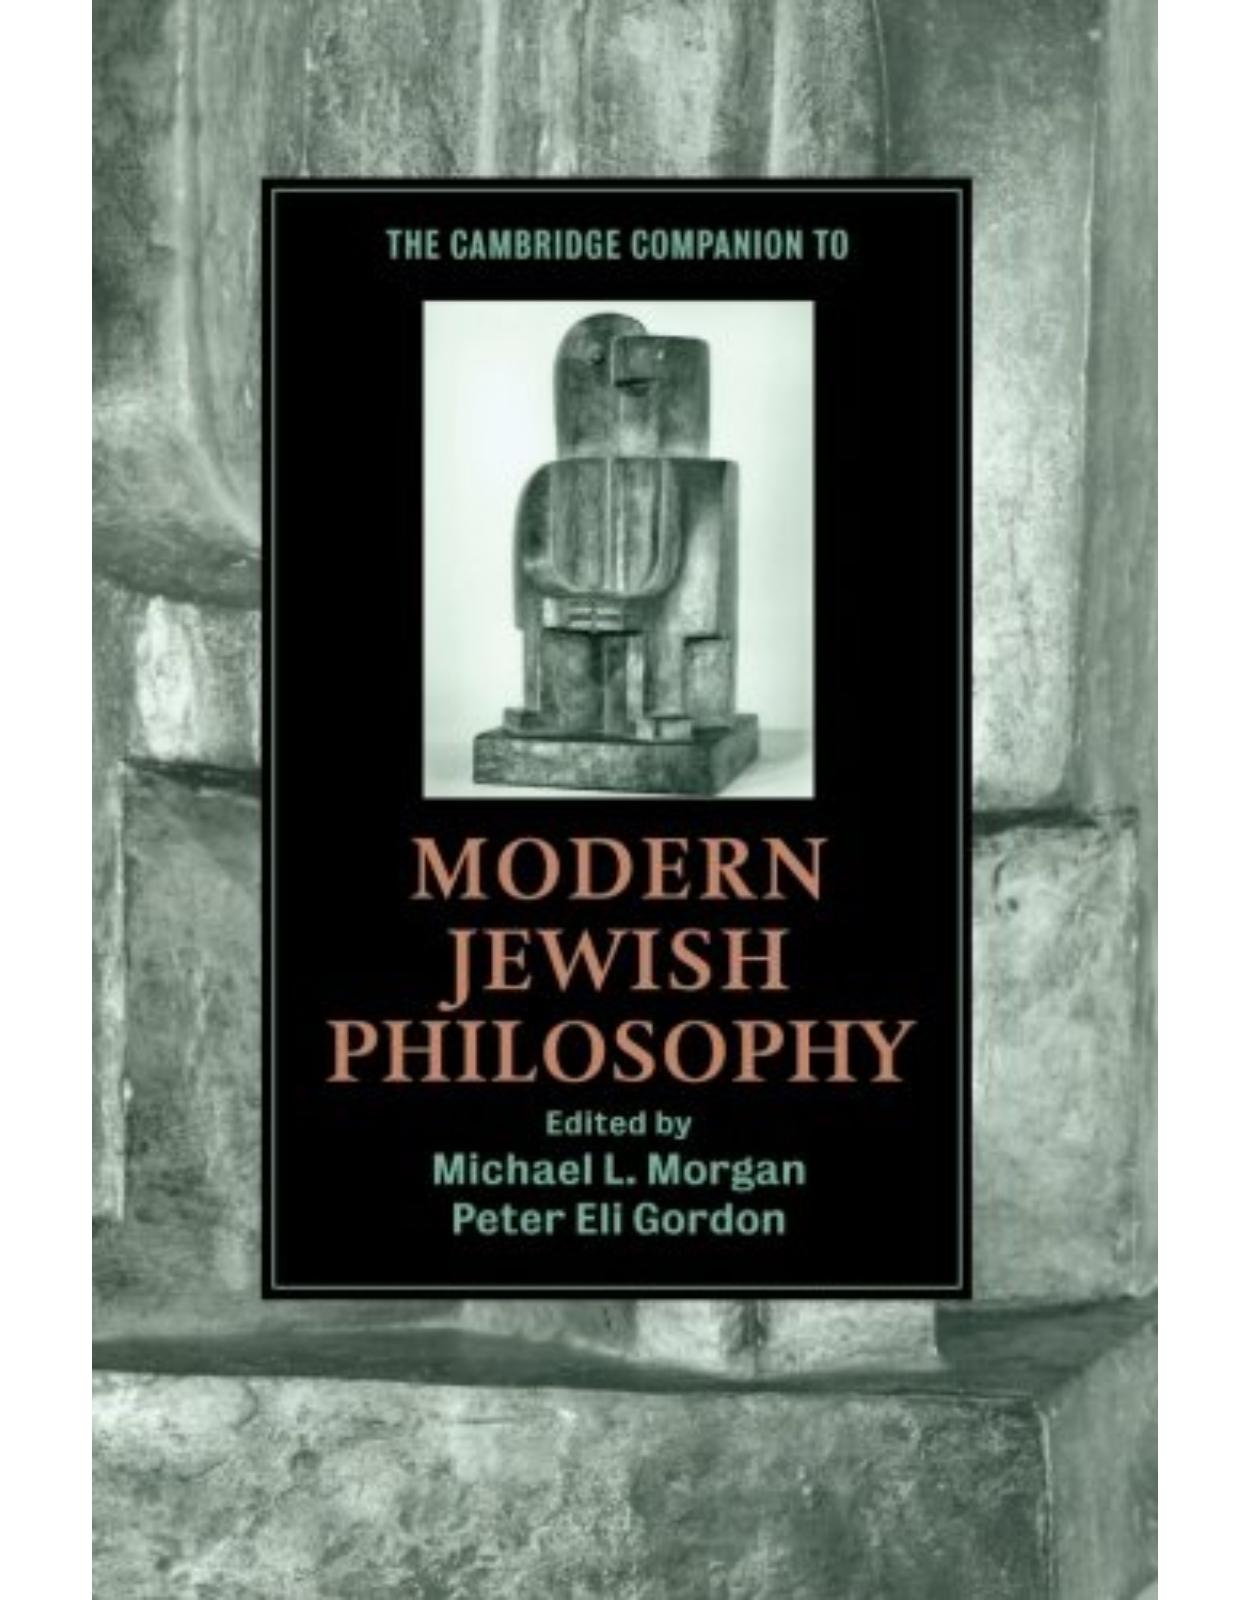 The Cambridge Companion to Modern Jewish Philosophy (Cambridge Companions to Religion)